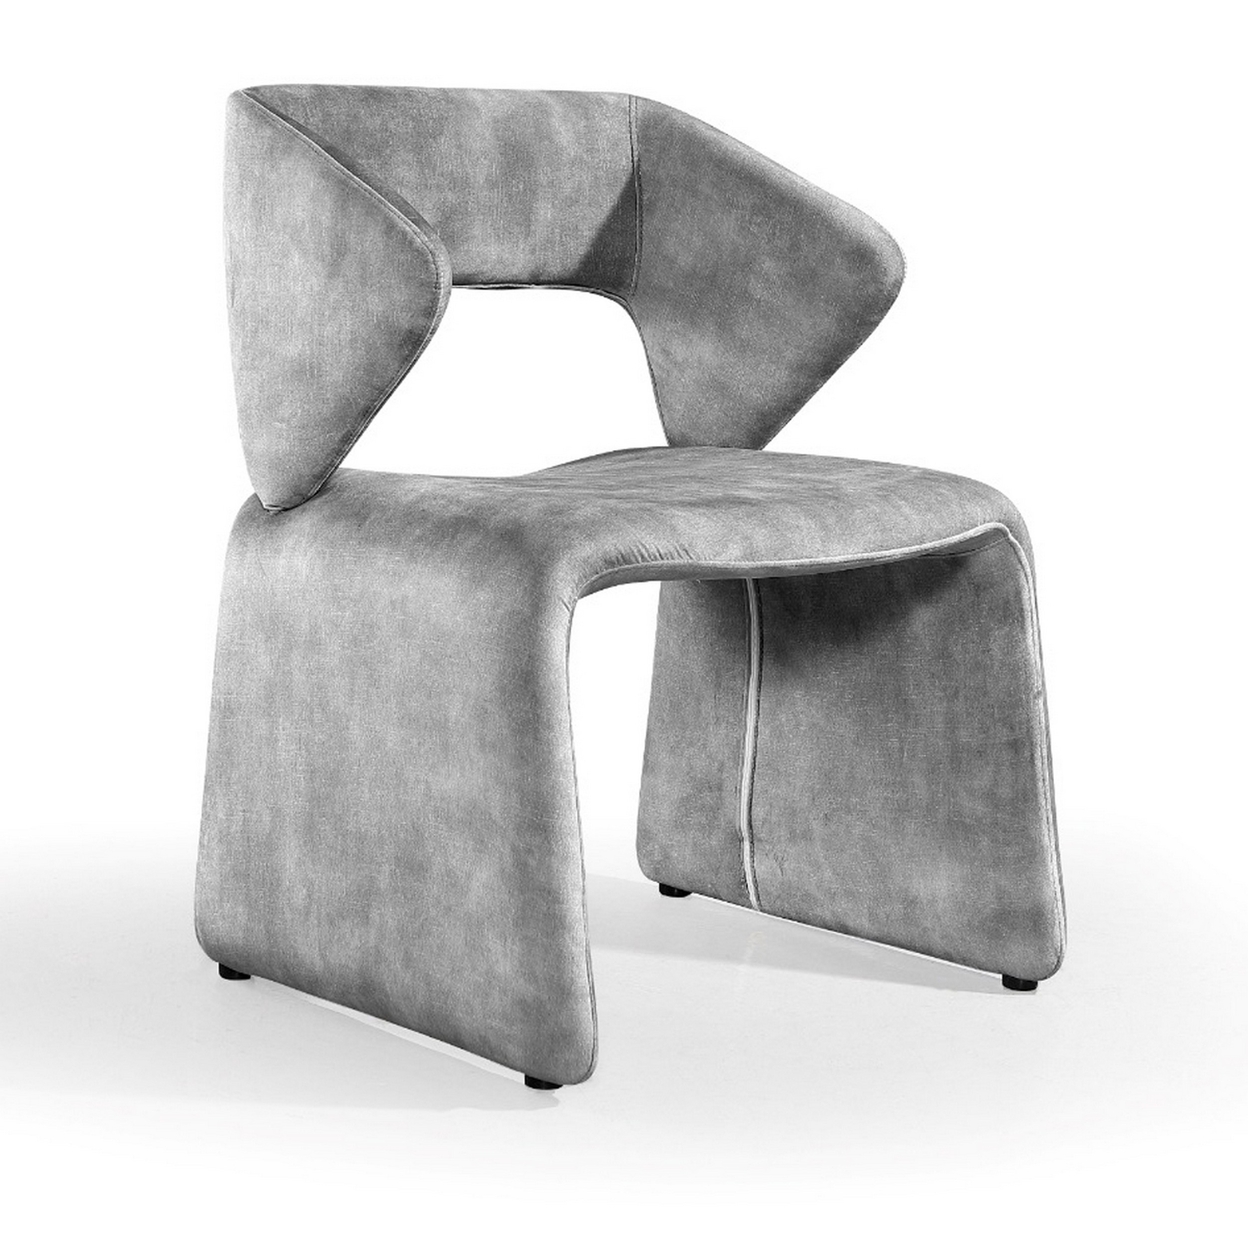 26 Inch Accent Chair, Gray Polyester, Plush Seat, Unique Cutout Backrest- Saltoro Sherpi